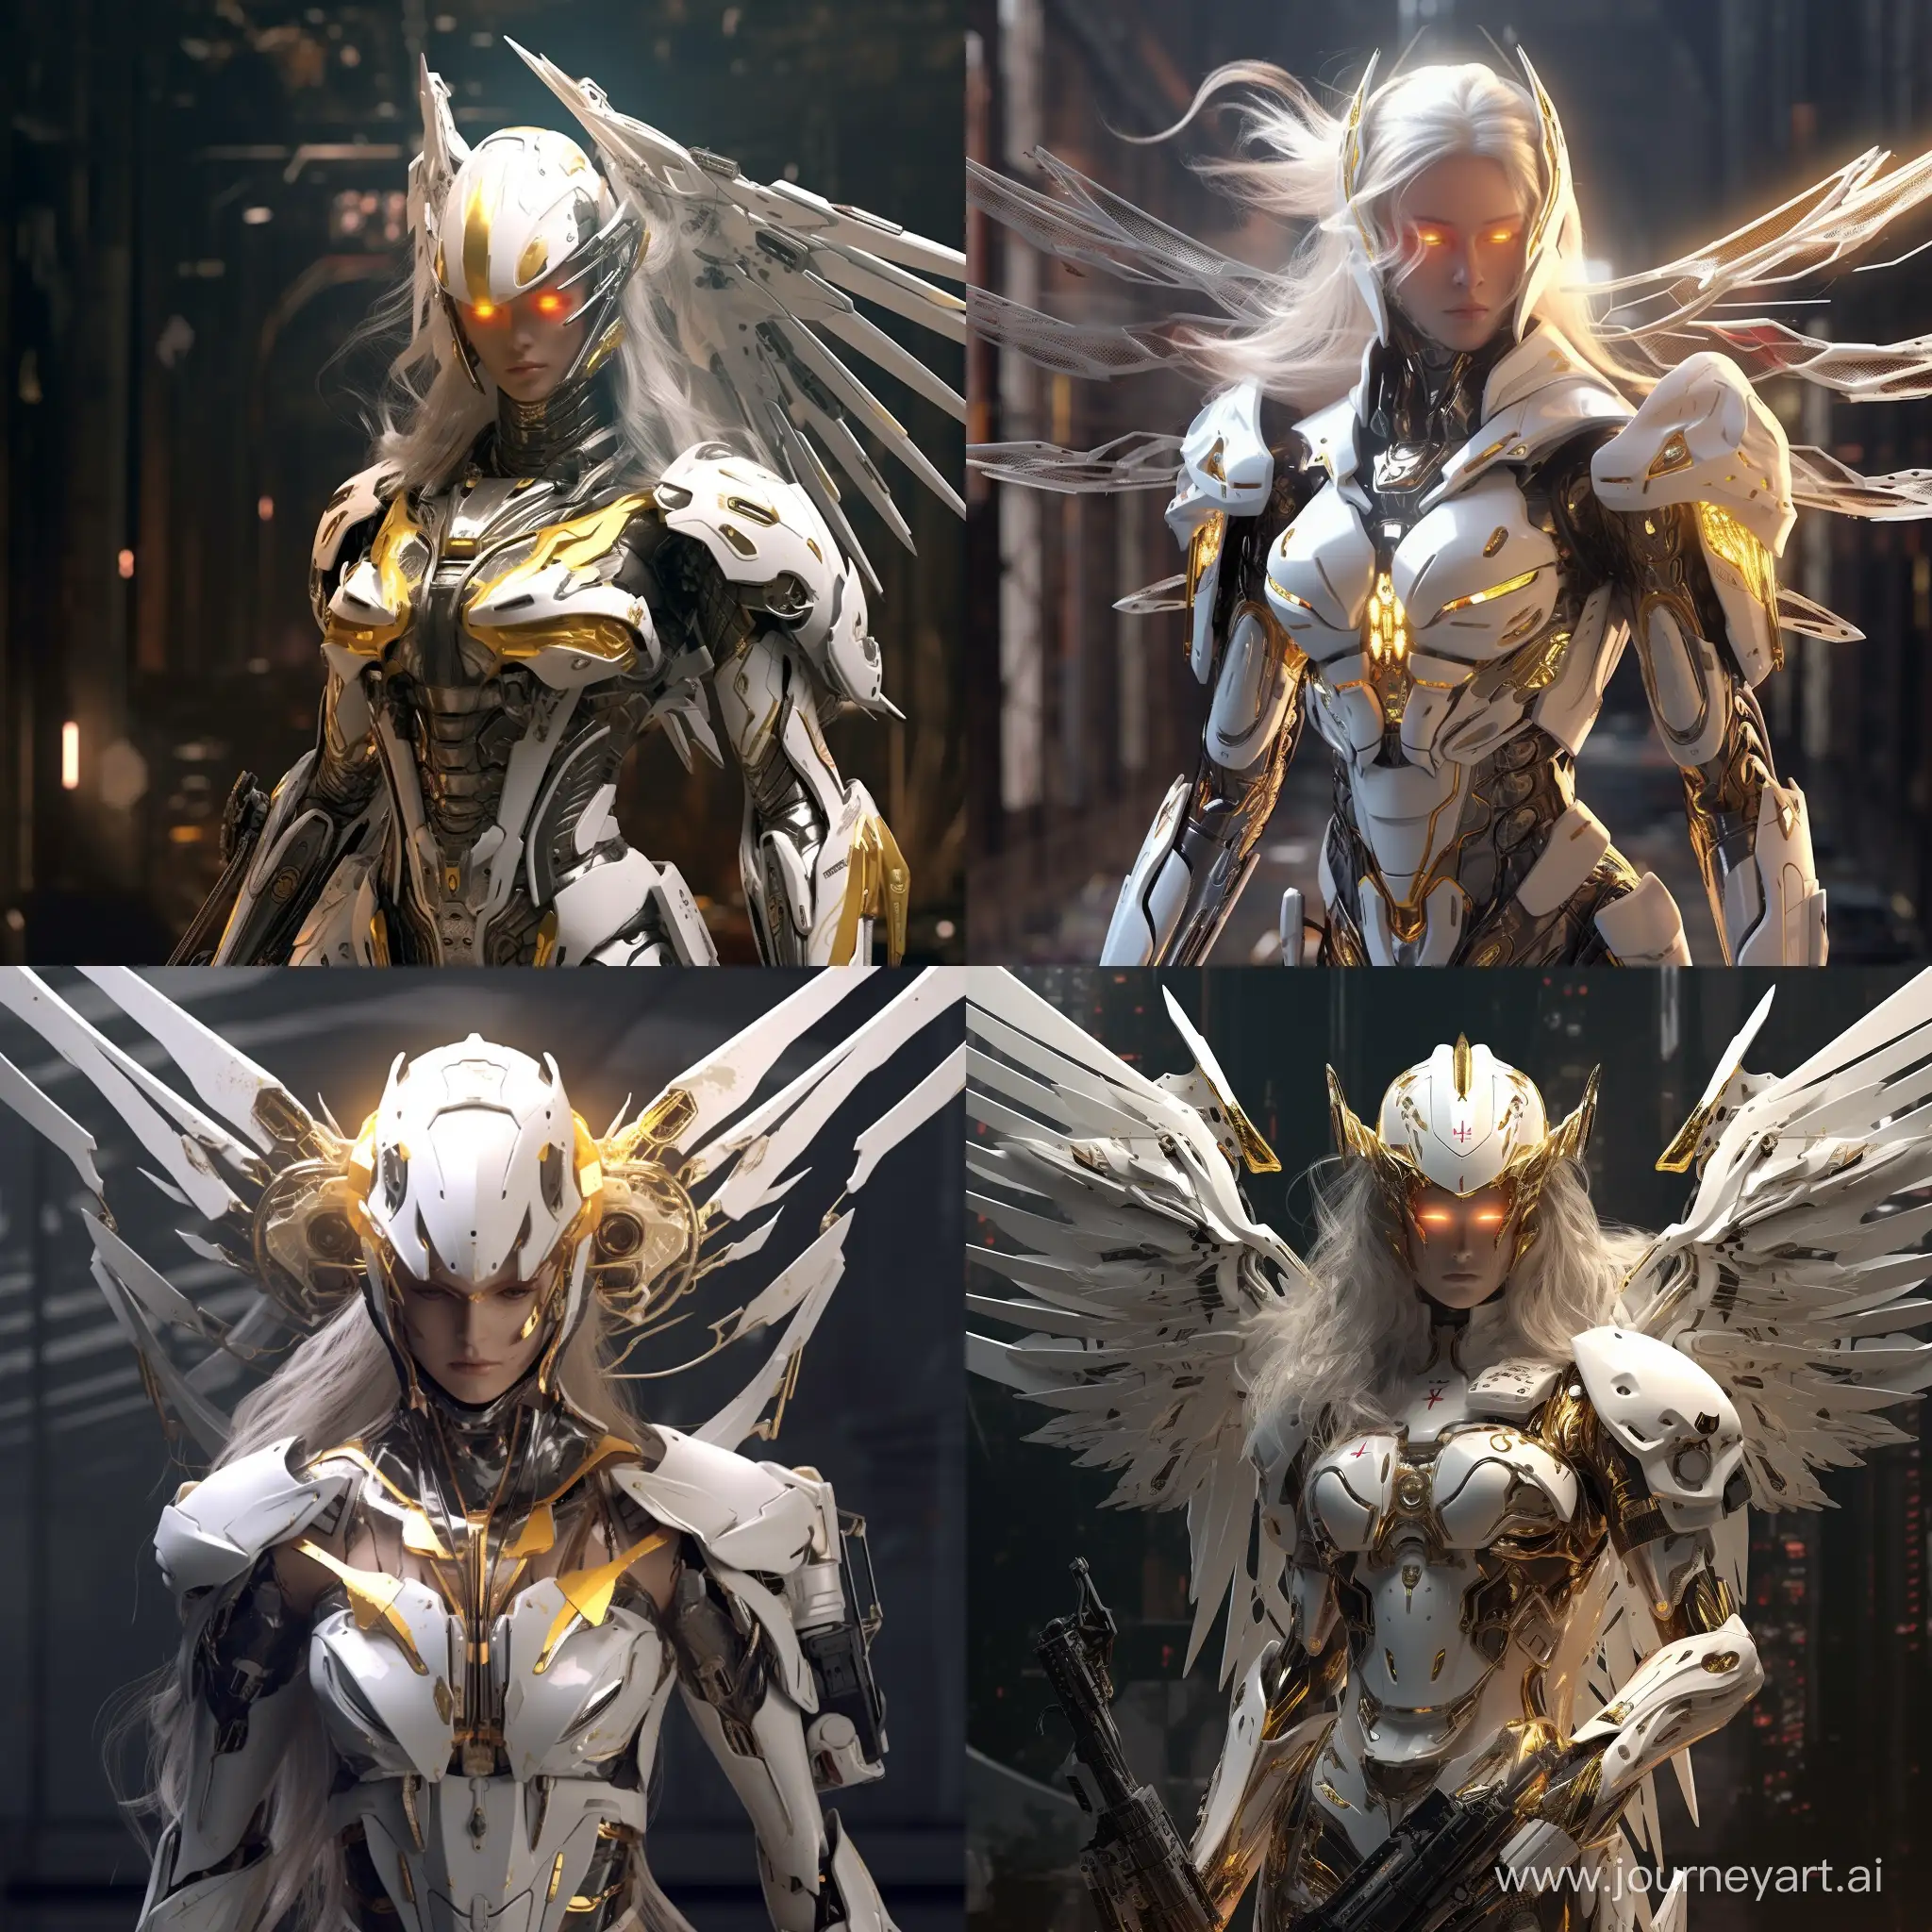 Futuristic-Angelic-Female-Robot-with-Cyberpunk-Crossbow